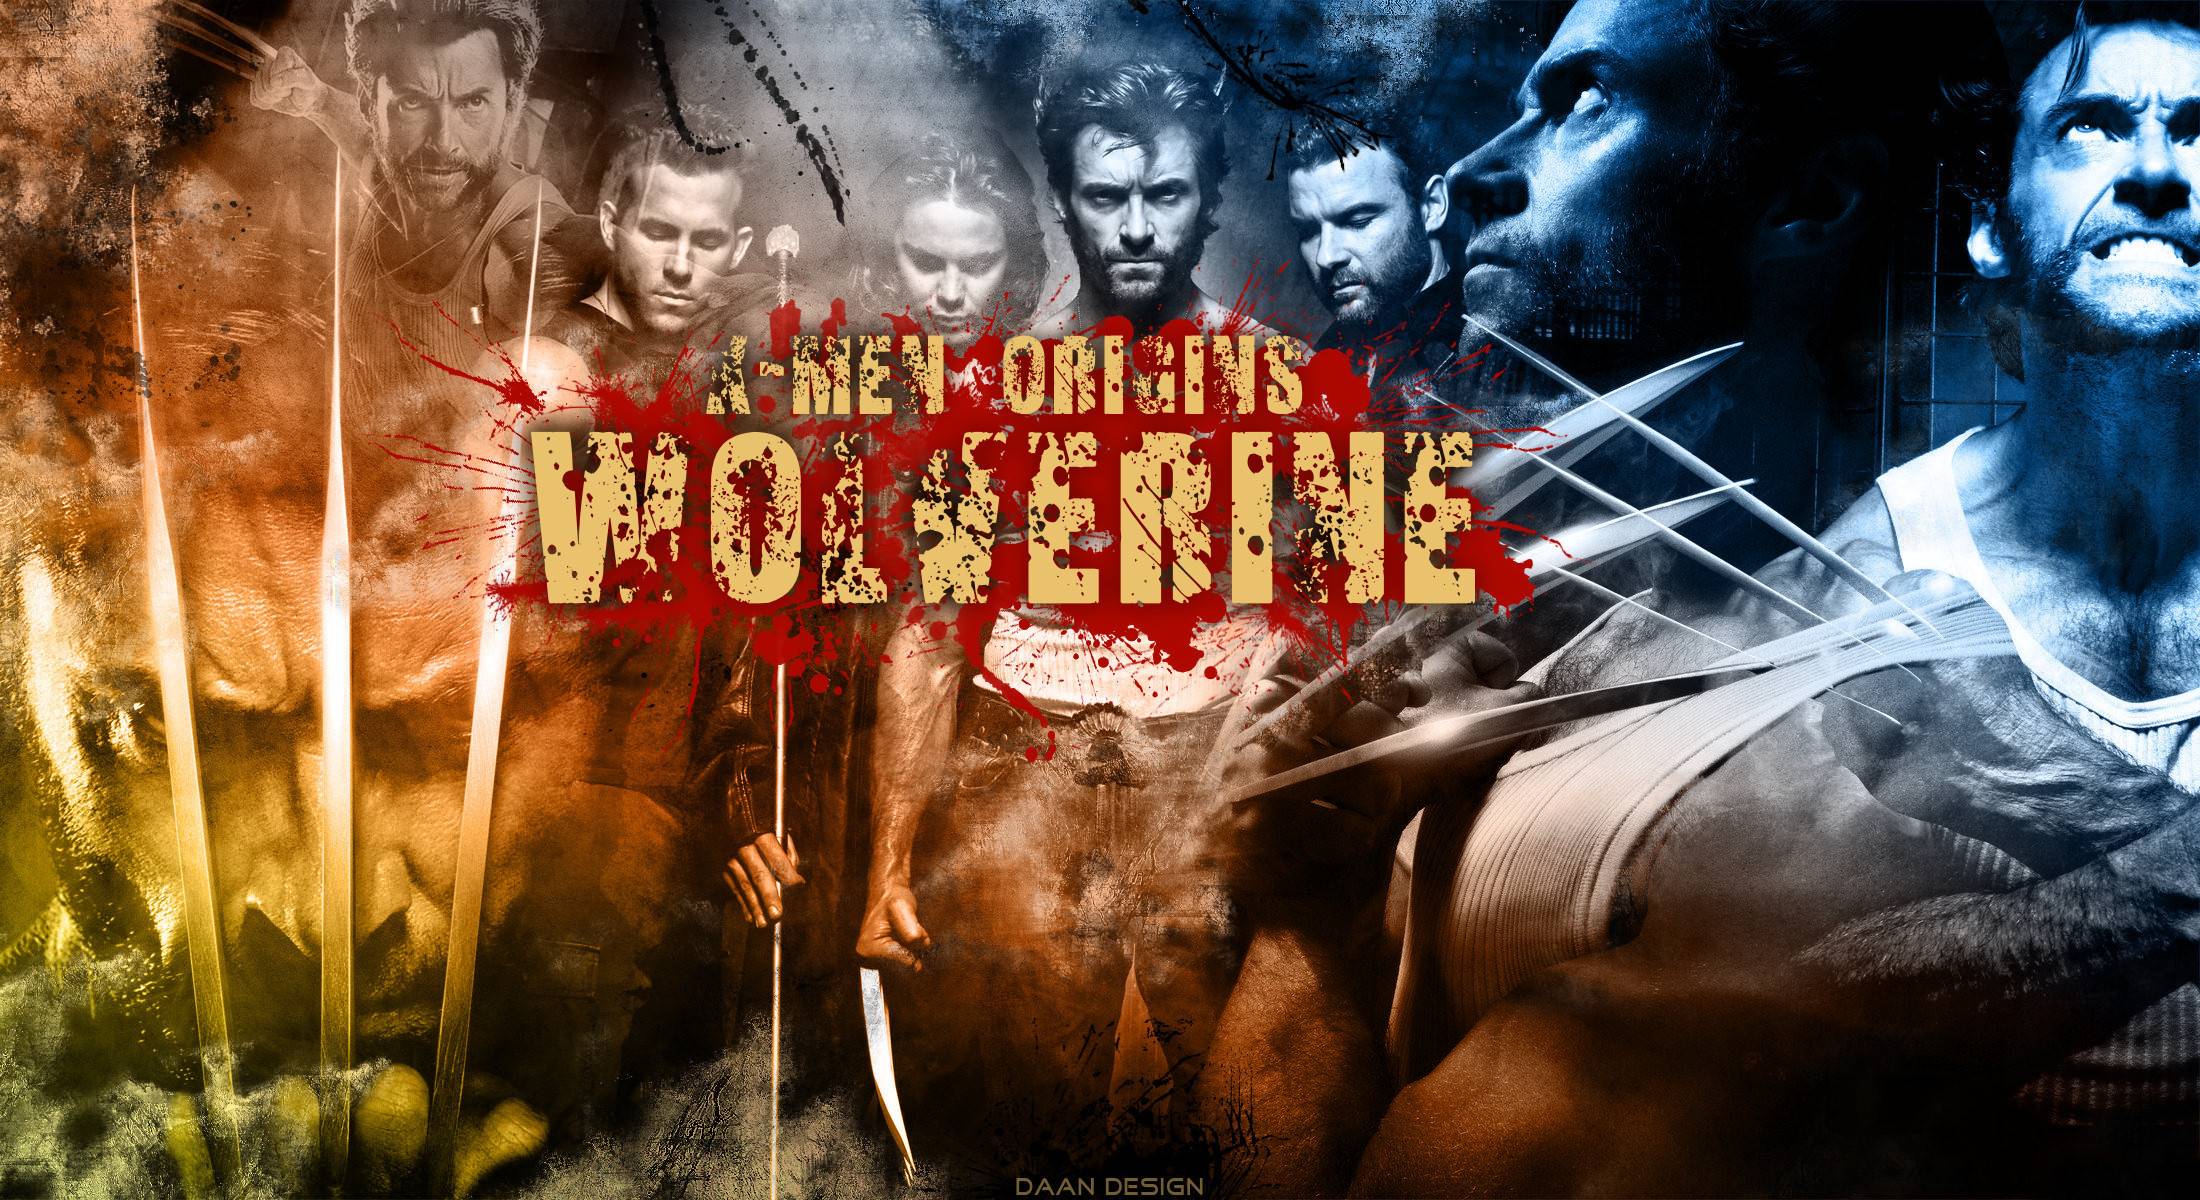 X Men Origins: Wolverine Wallpaper By Daan Design [Awesome]